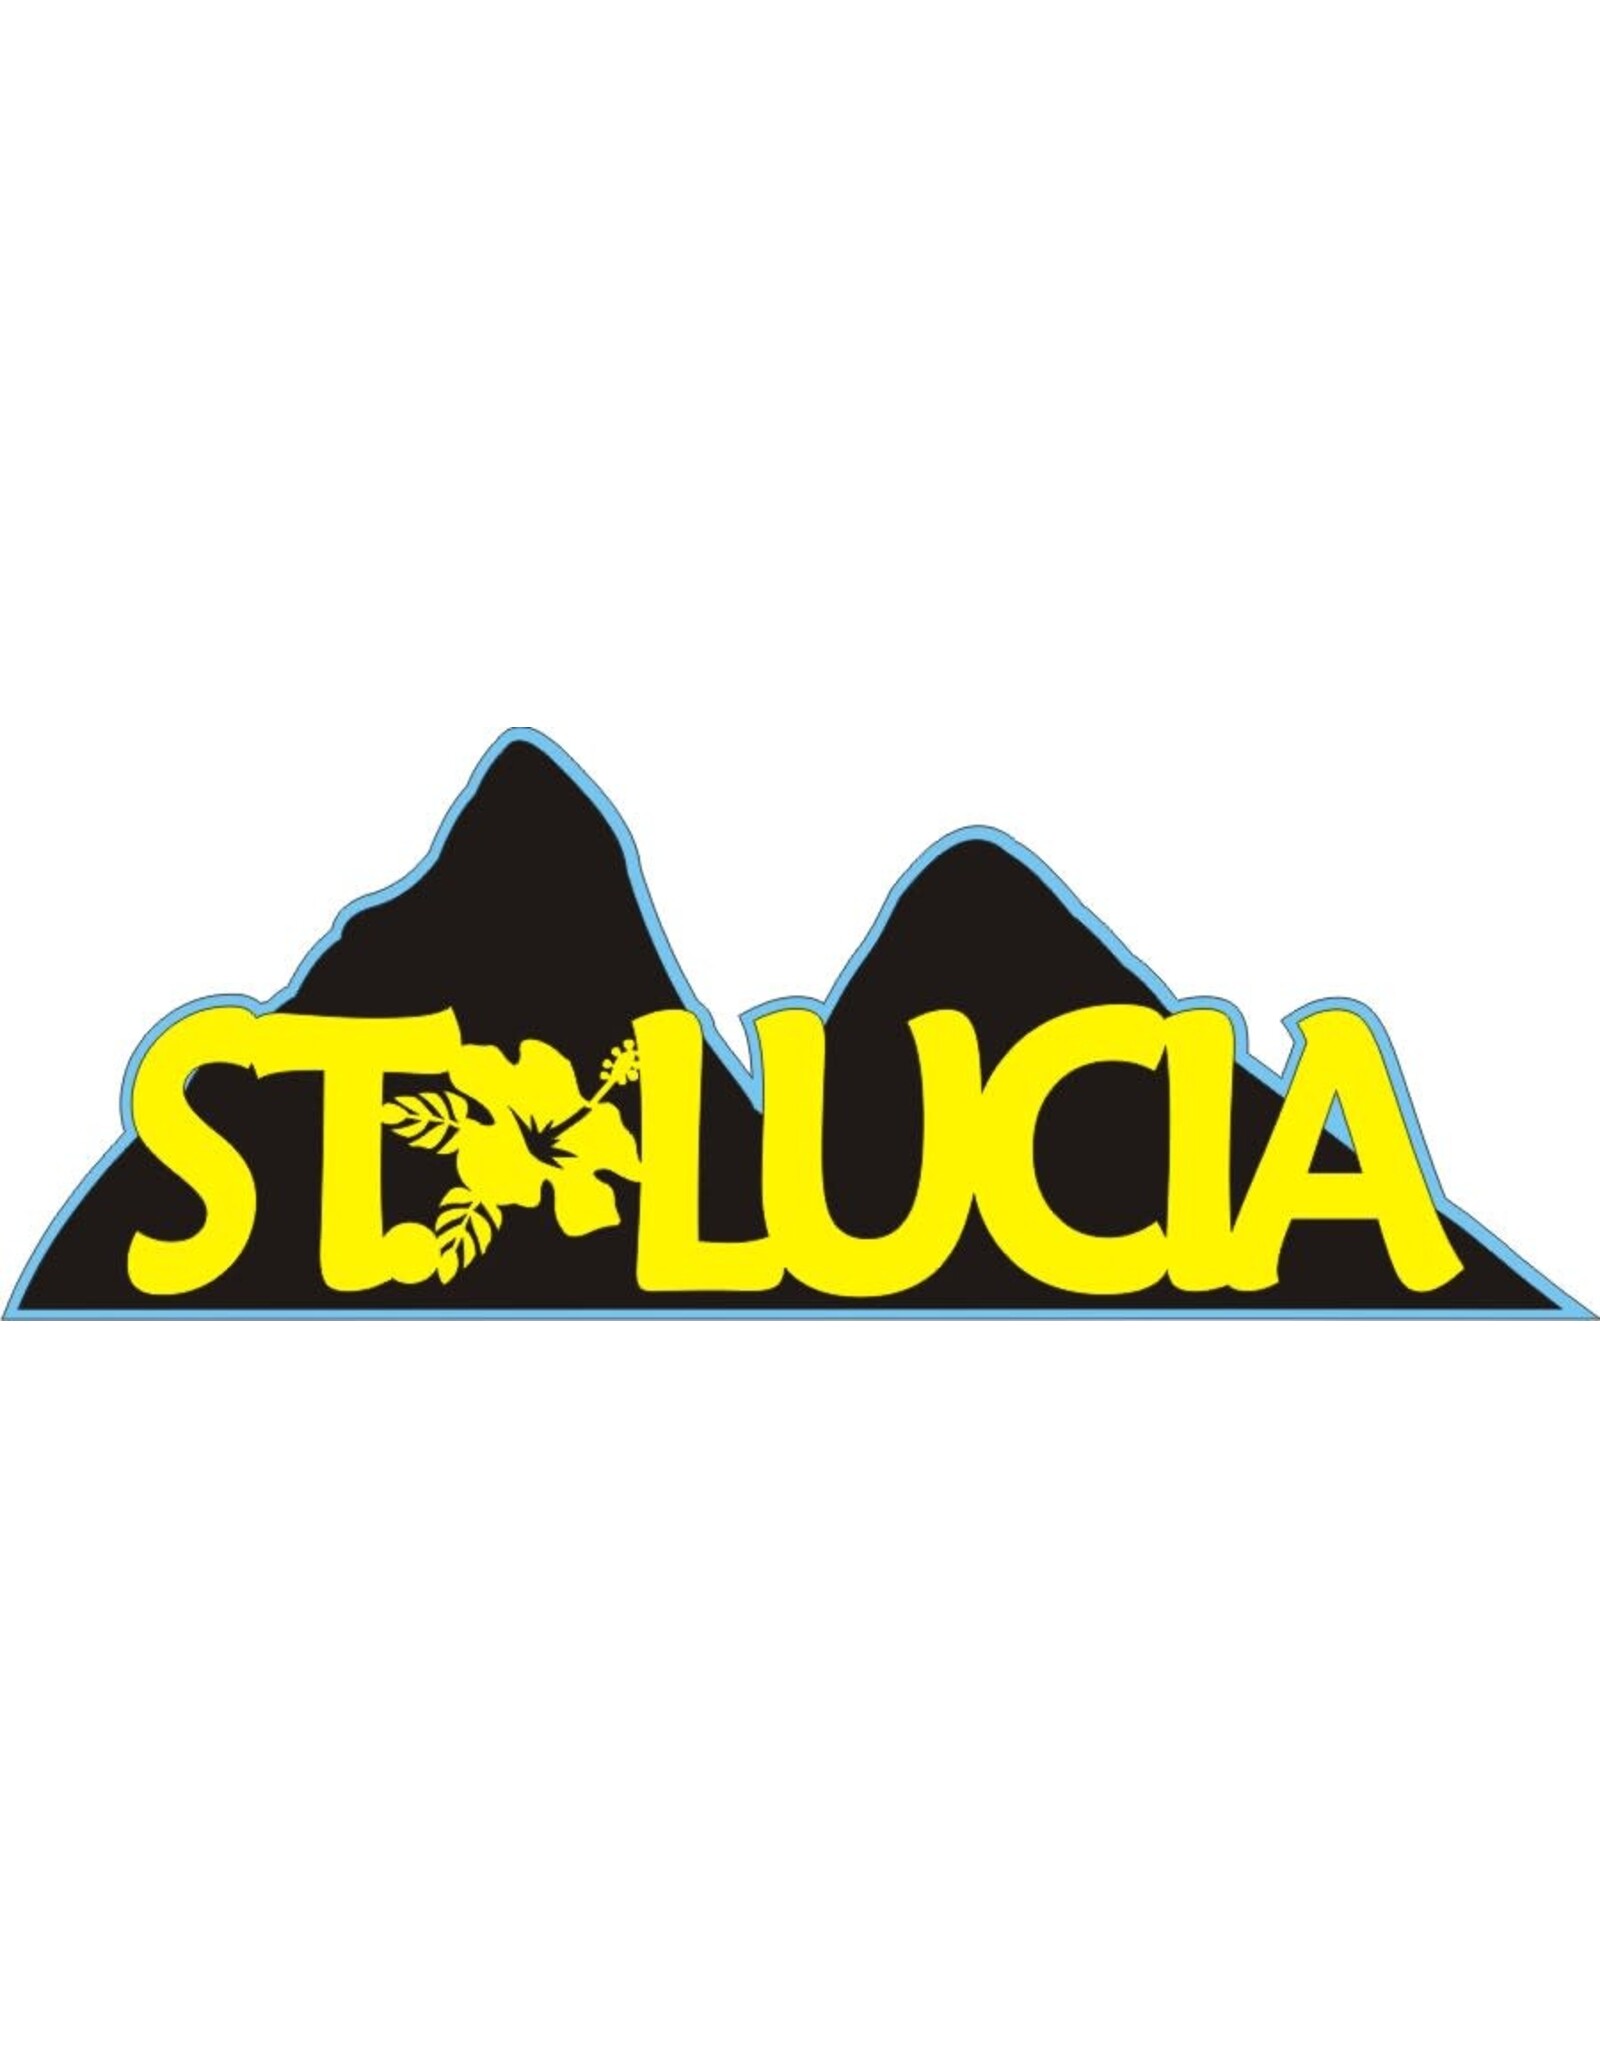 St Lucia banner